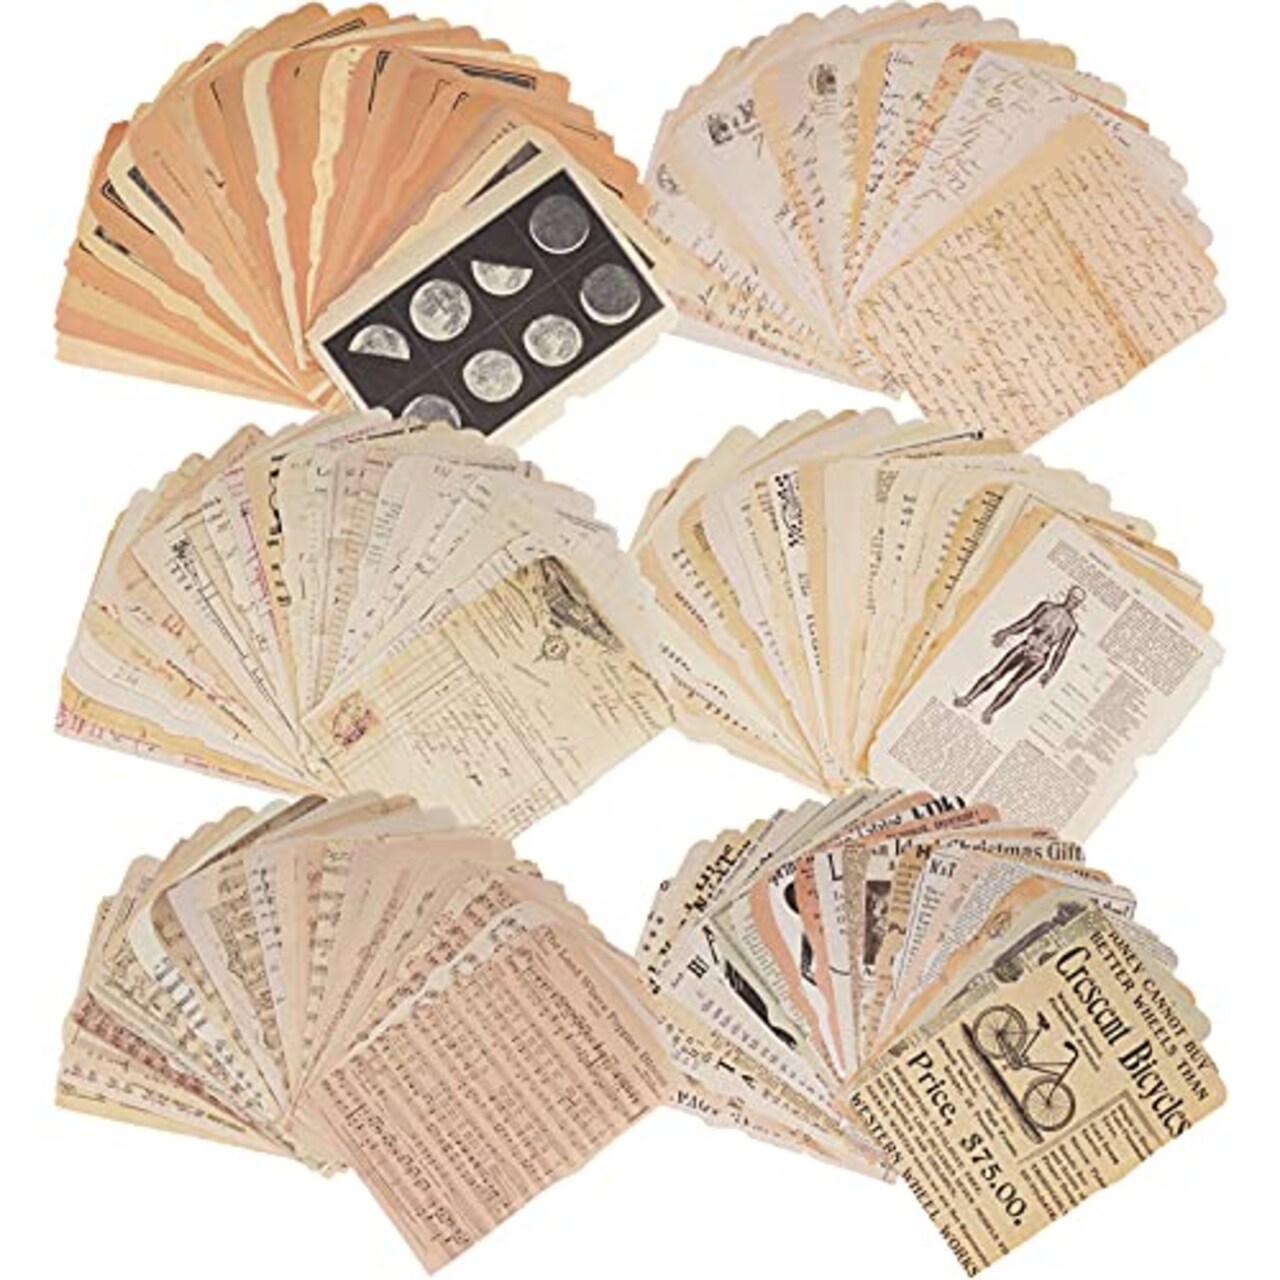 100 Pieces Vintage Ephemera Pack Junk Journal Kit Scrapbook Supplies  Decoupage Paper Sticker Material for Art Journaling Bullet Journals  Planners